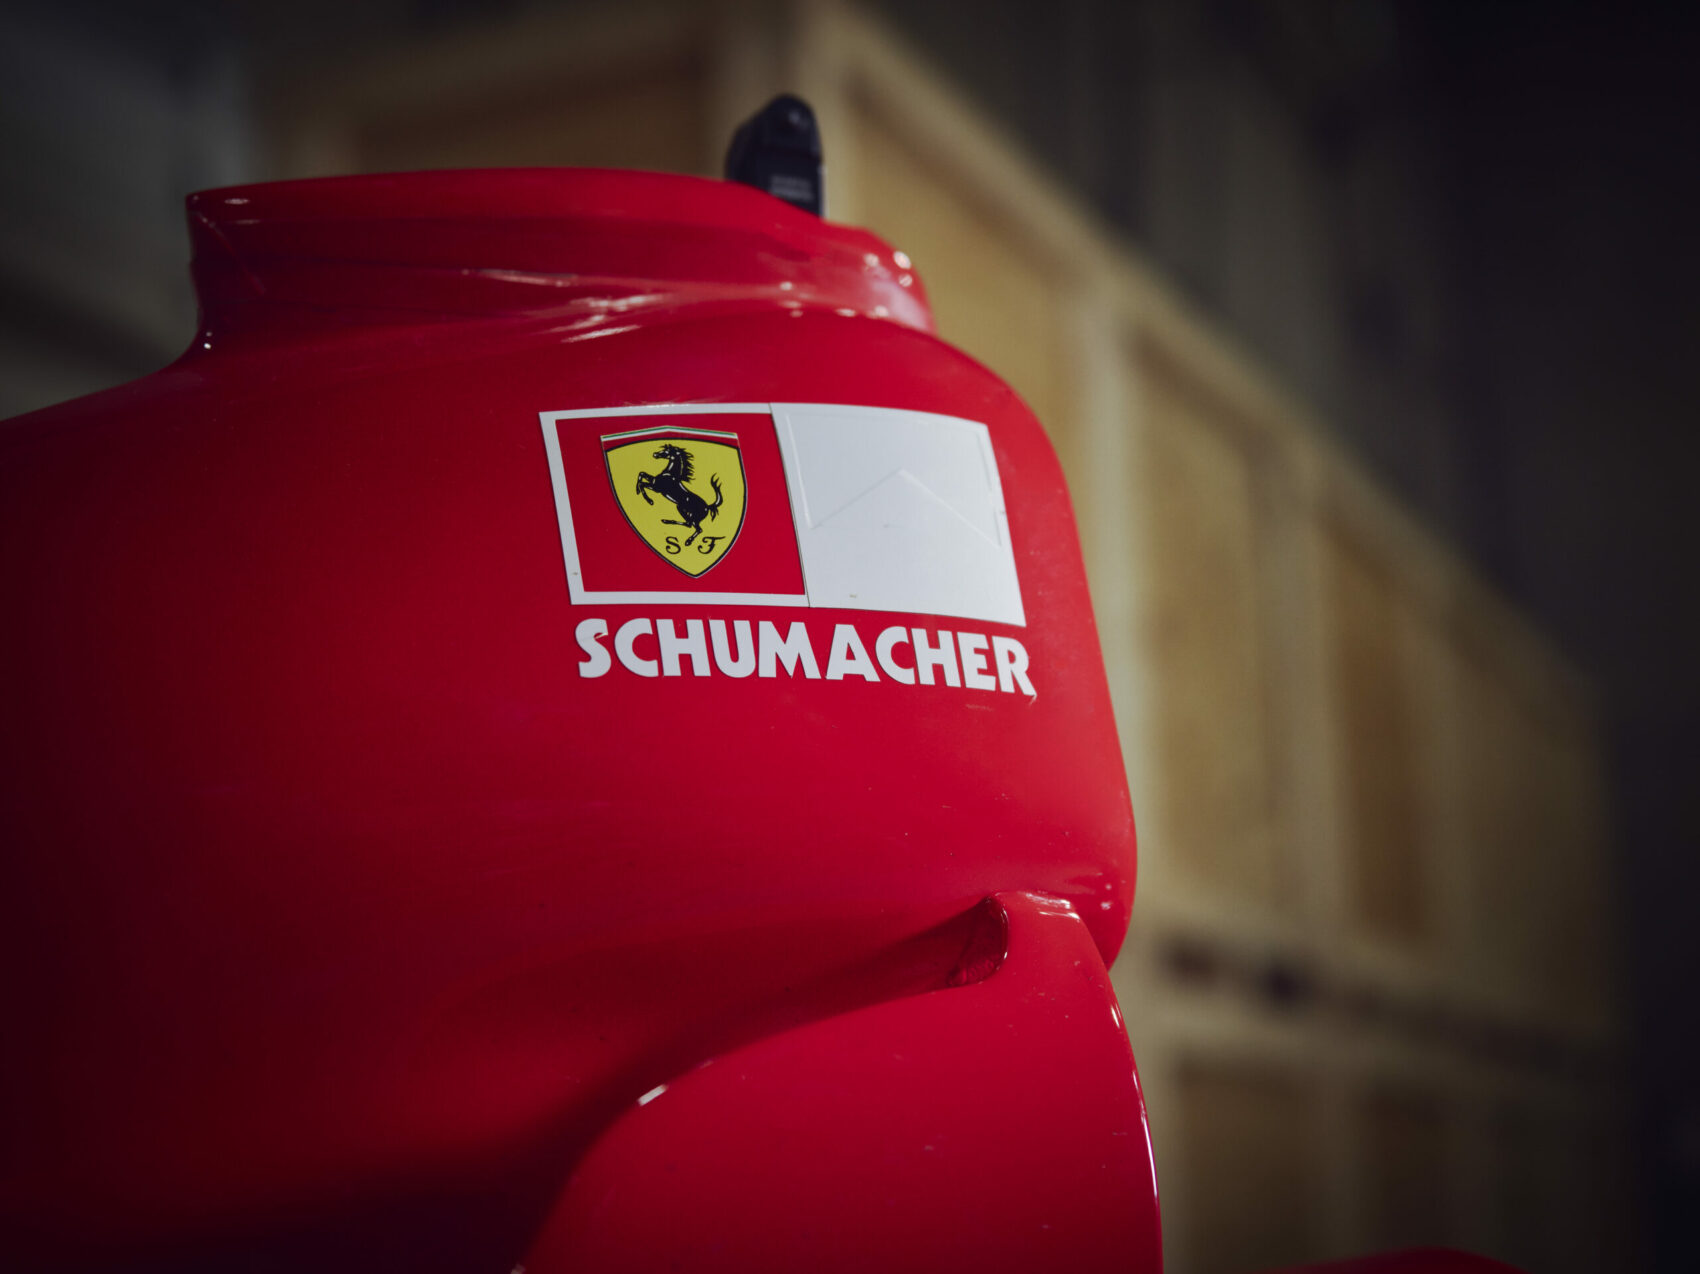 Michael Schumacher, Ferrari F1-2000